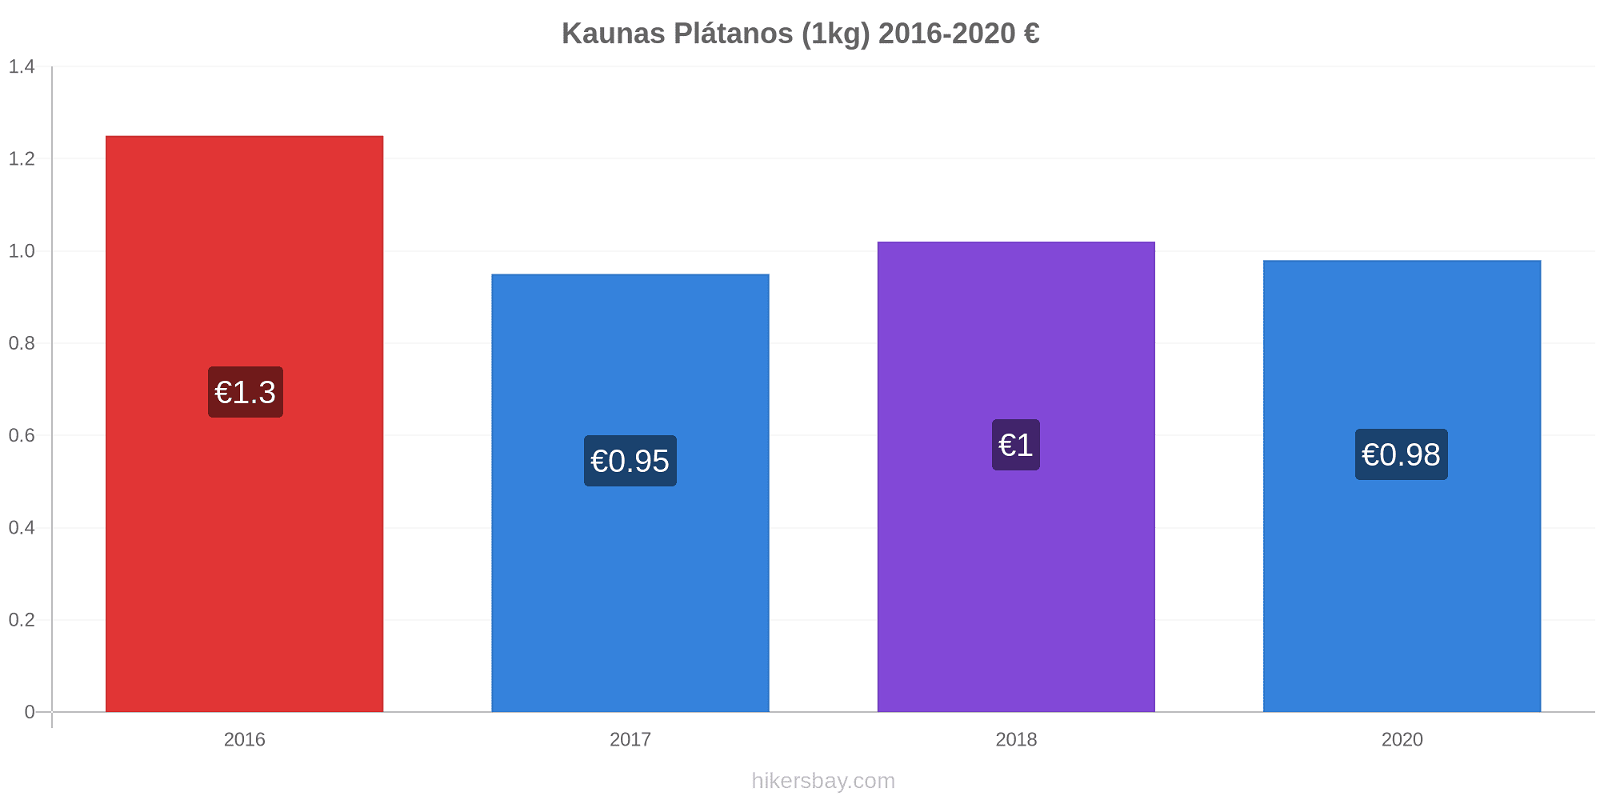 Kaunas cambios de precios Plátano (1kg) hikersbay.com